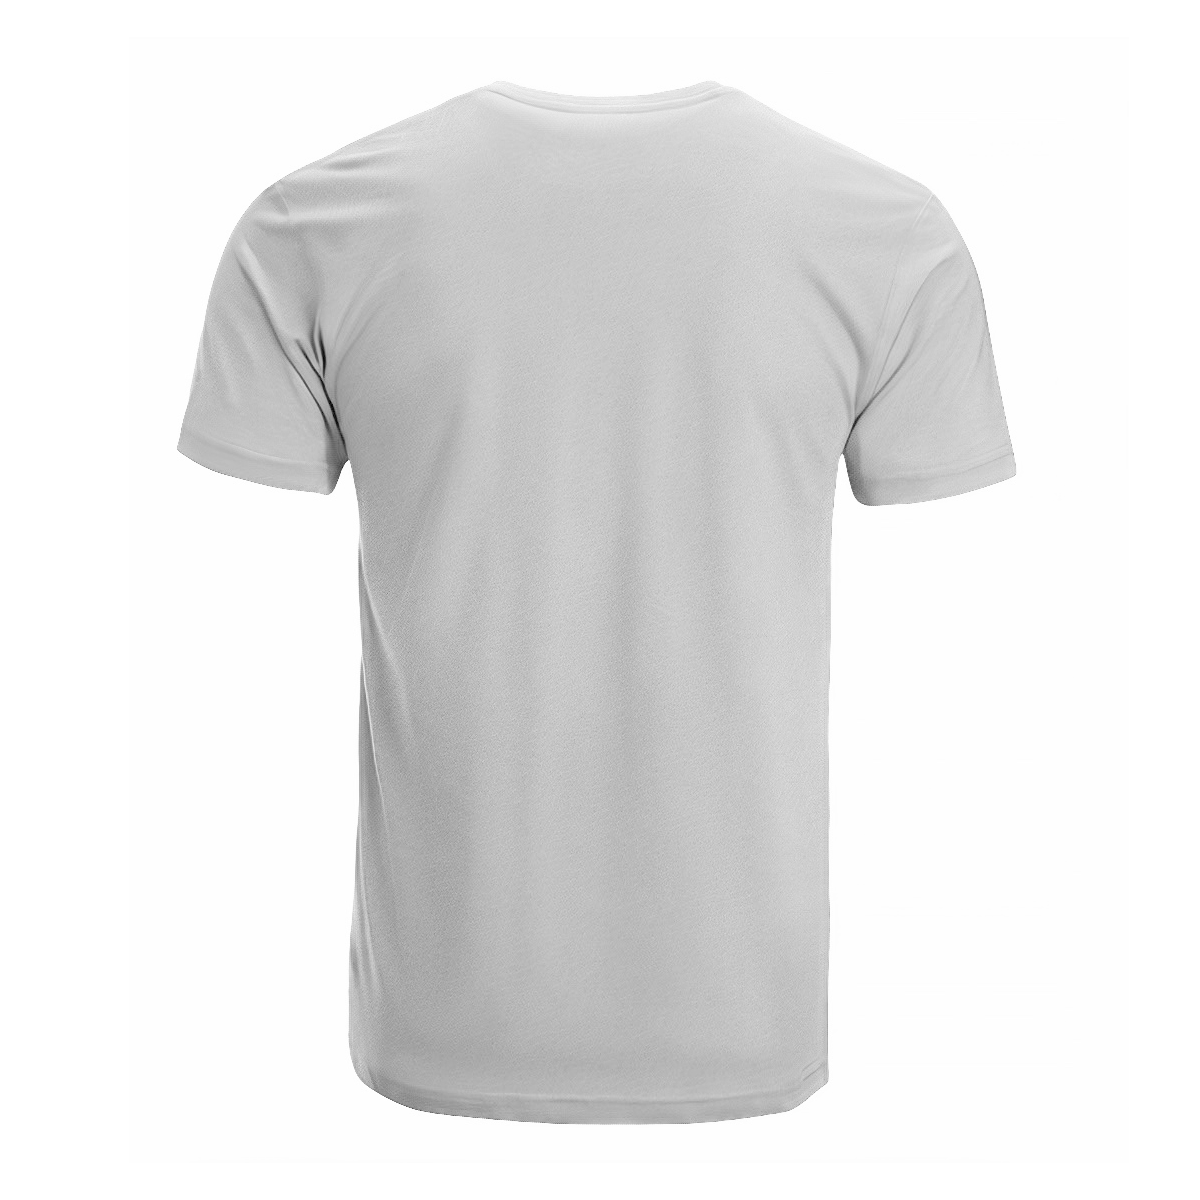 Auchinleck Tartan Crest T-shirt - I'm not yelling style